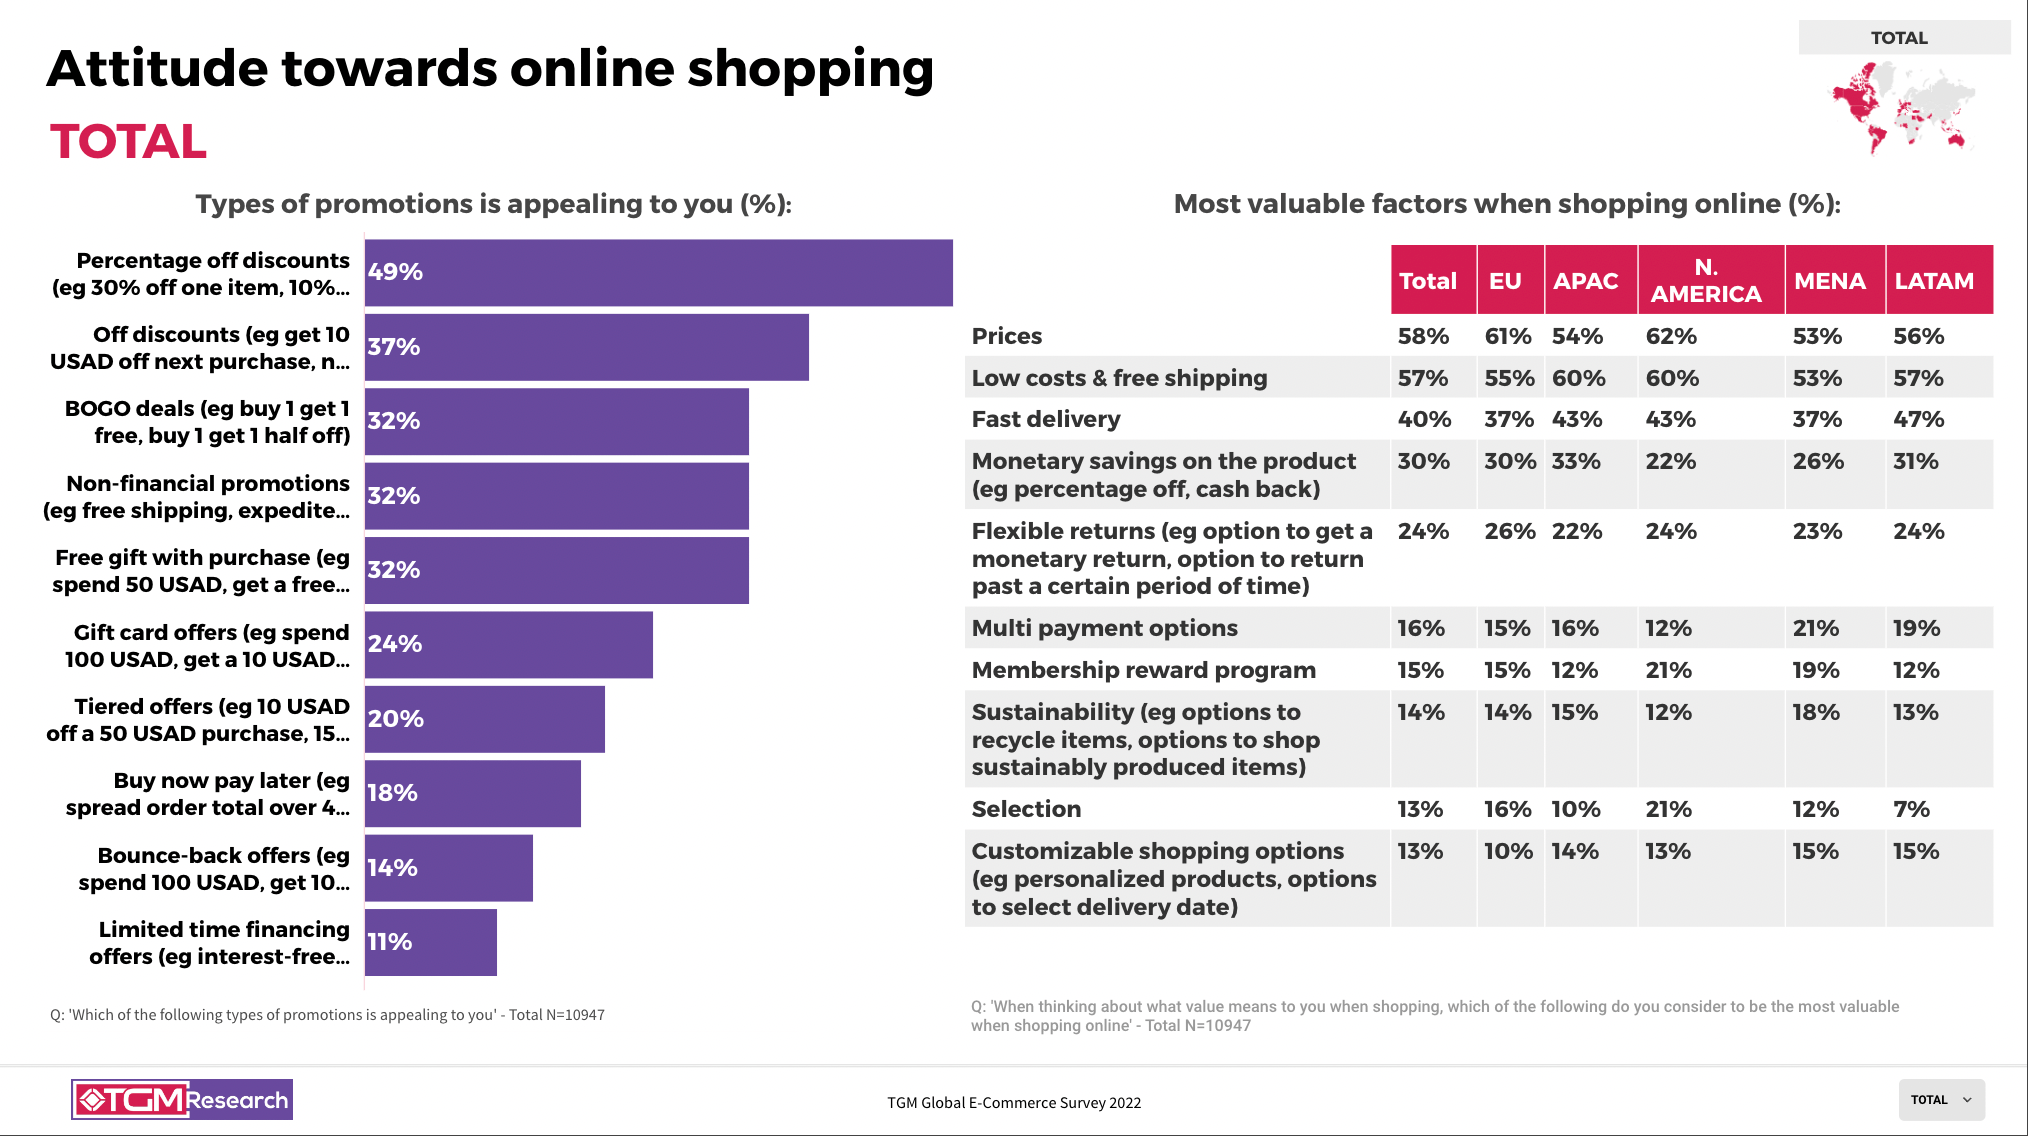 ATTITUDE TOWARDS ONLINE SHOPPING - global insights - e-commerce survey worldwide